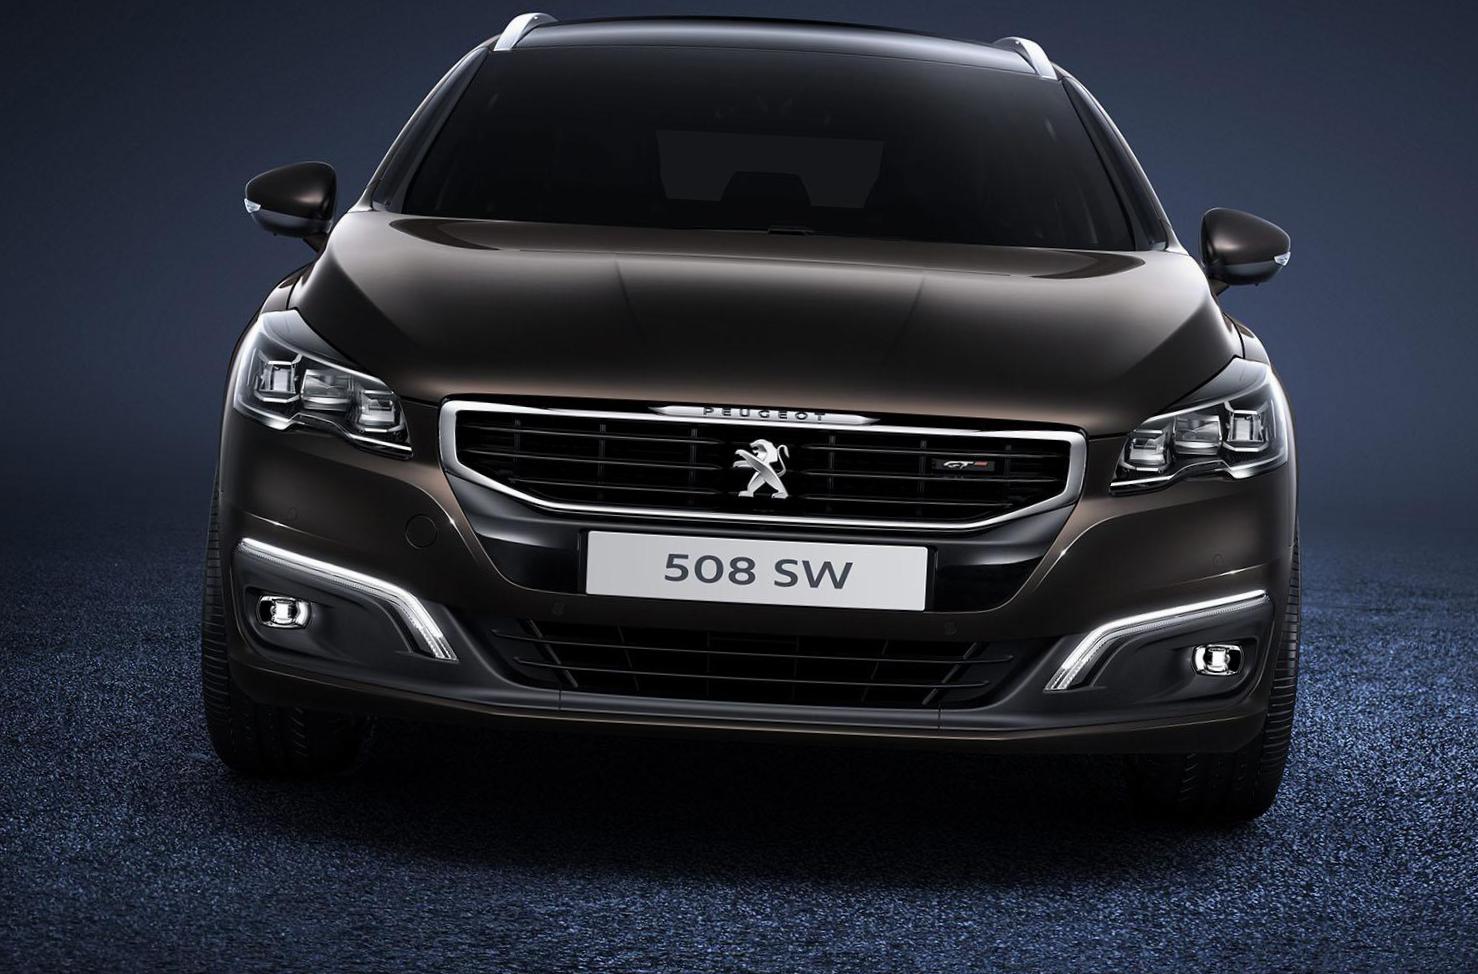 508 SW Peugeot review 2013